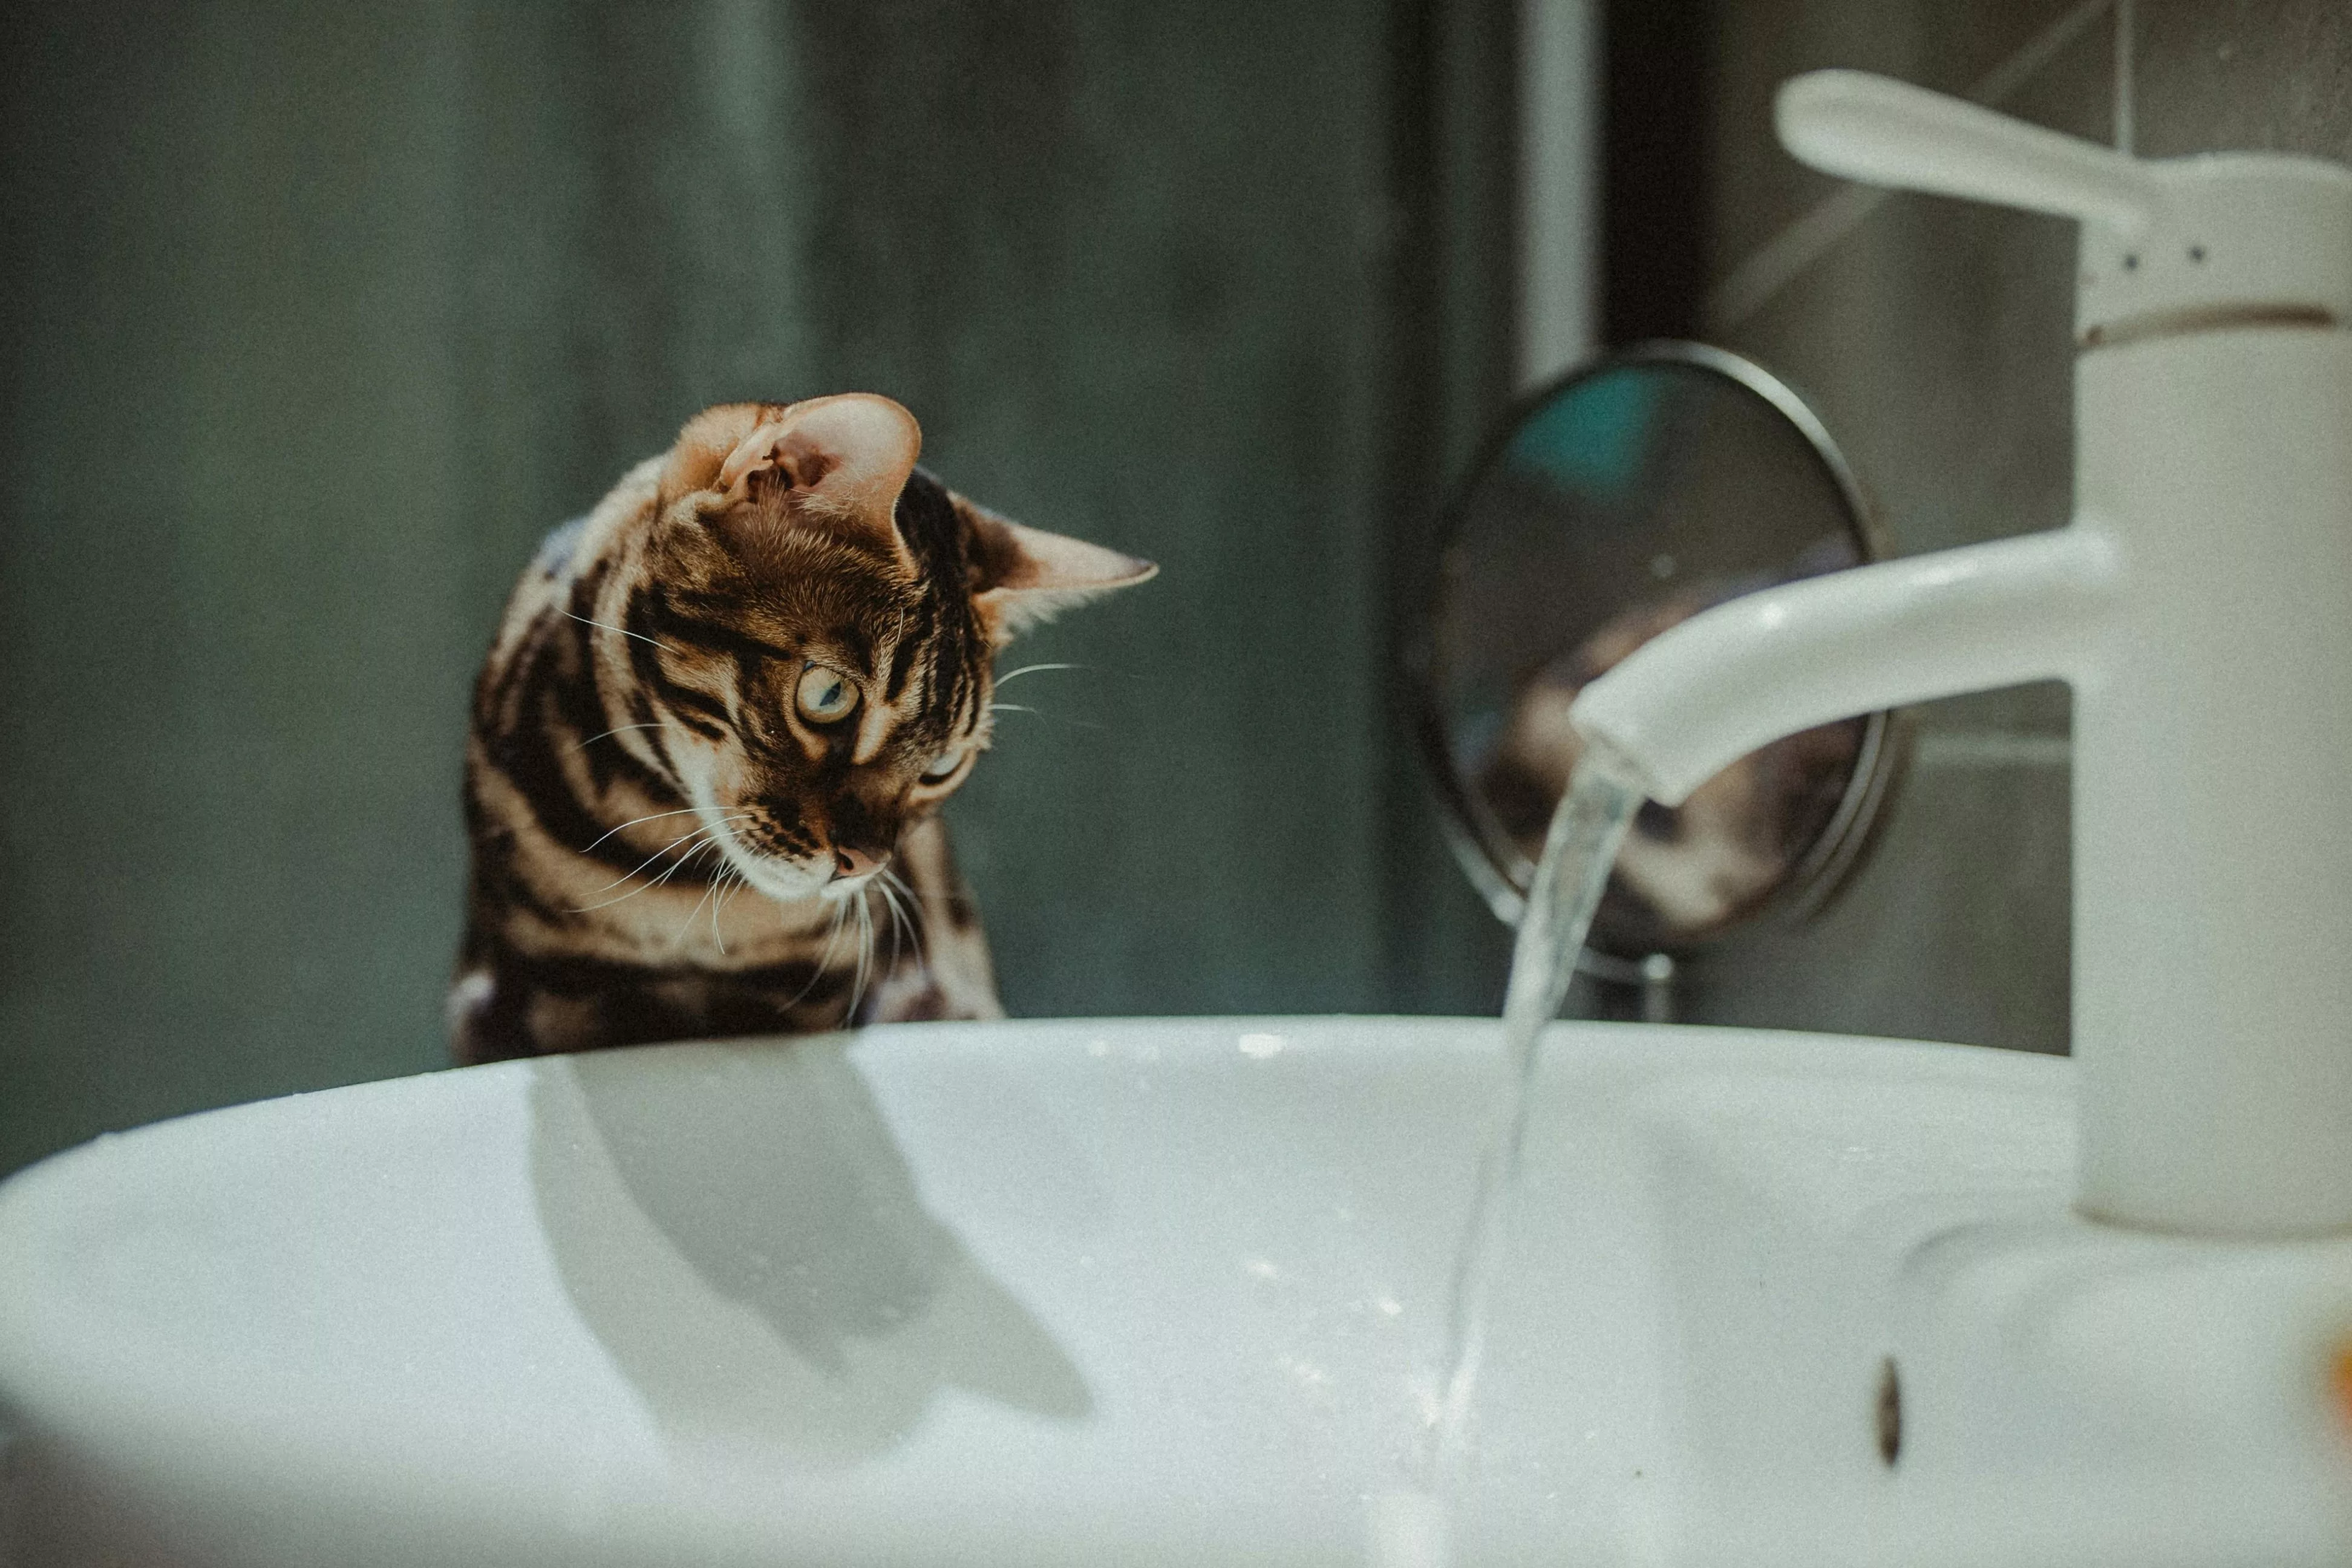 Cat on sink